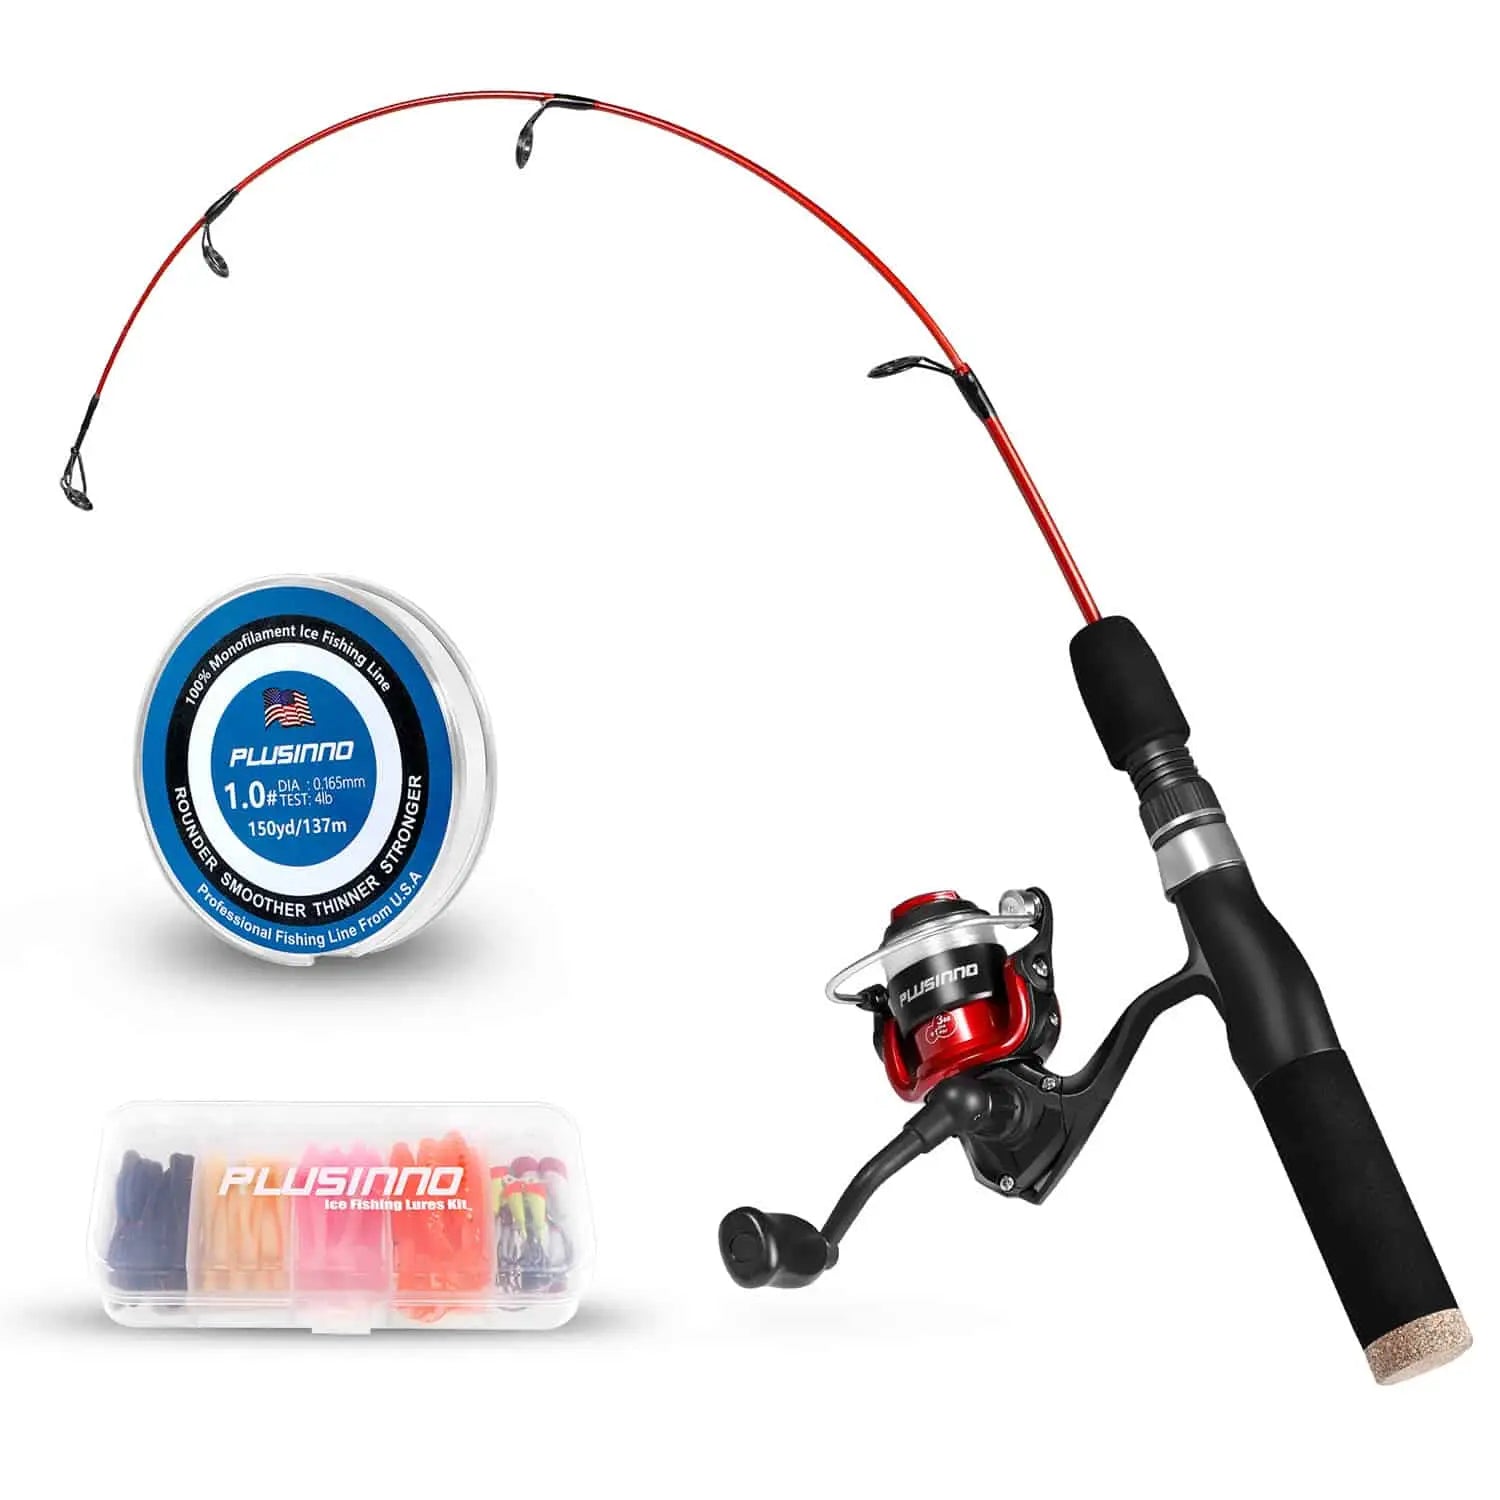 PLUSINNO ICE Ⅰ Ice Fishing Rod Reel Comb Full kit – Plusinno